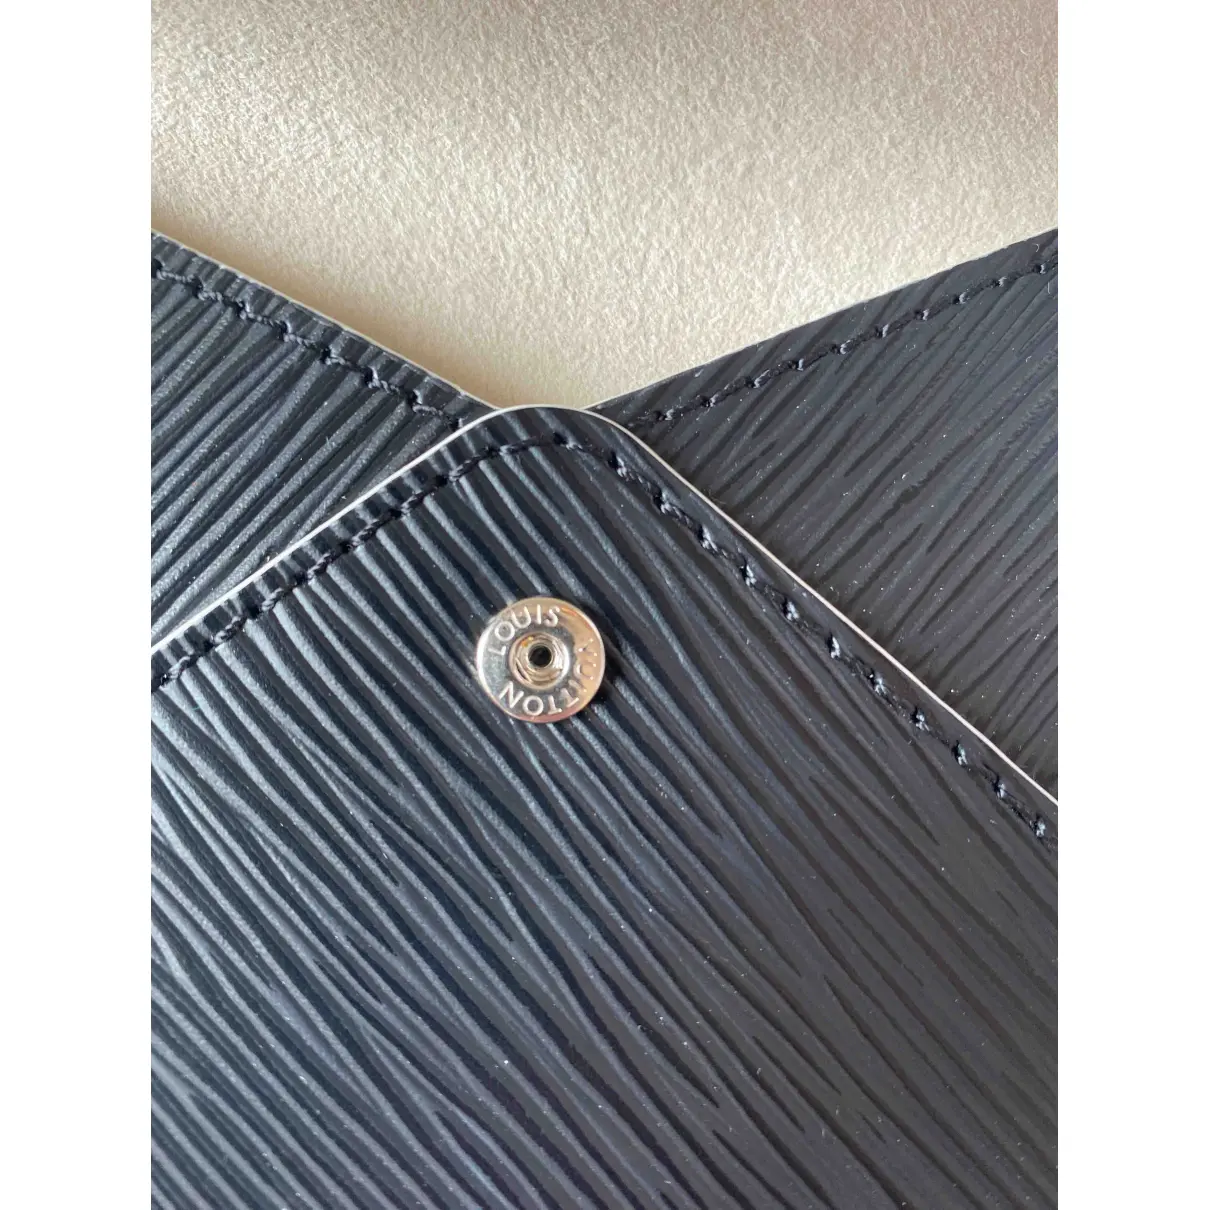 Kirigami leather clutch Louis Vuitton